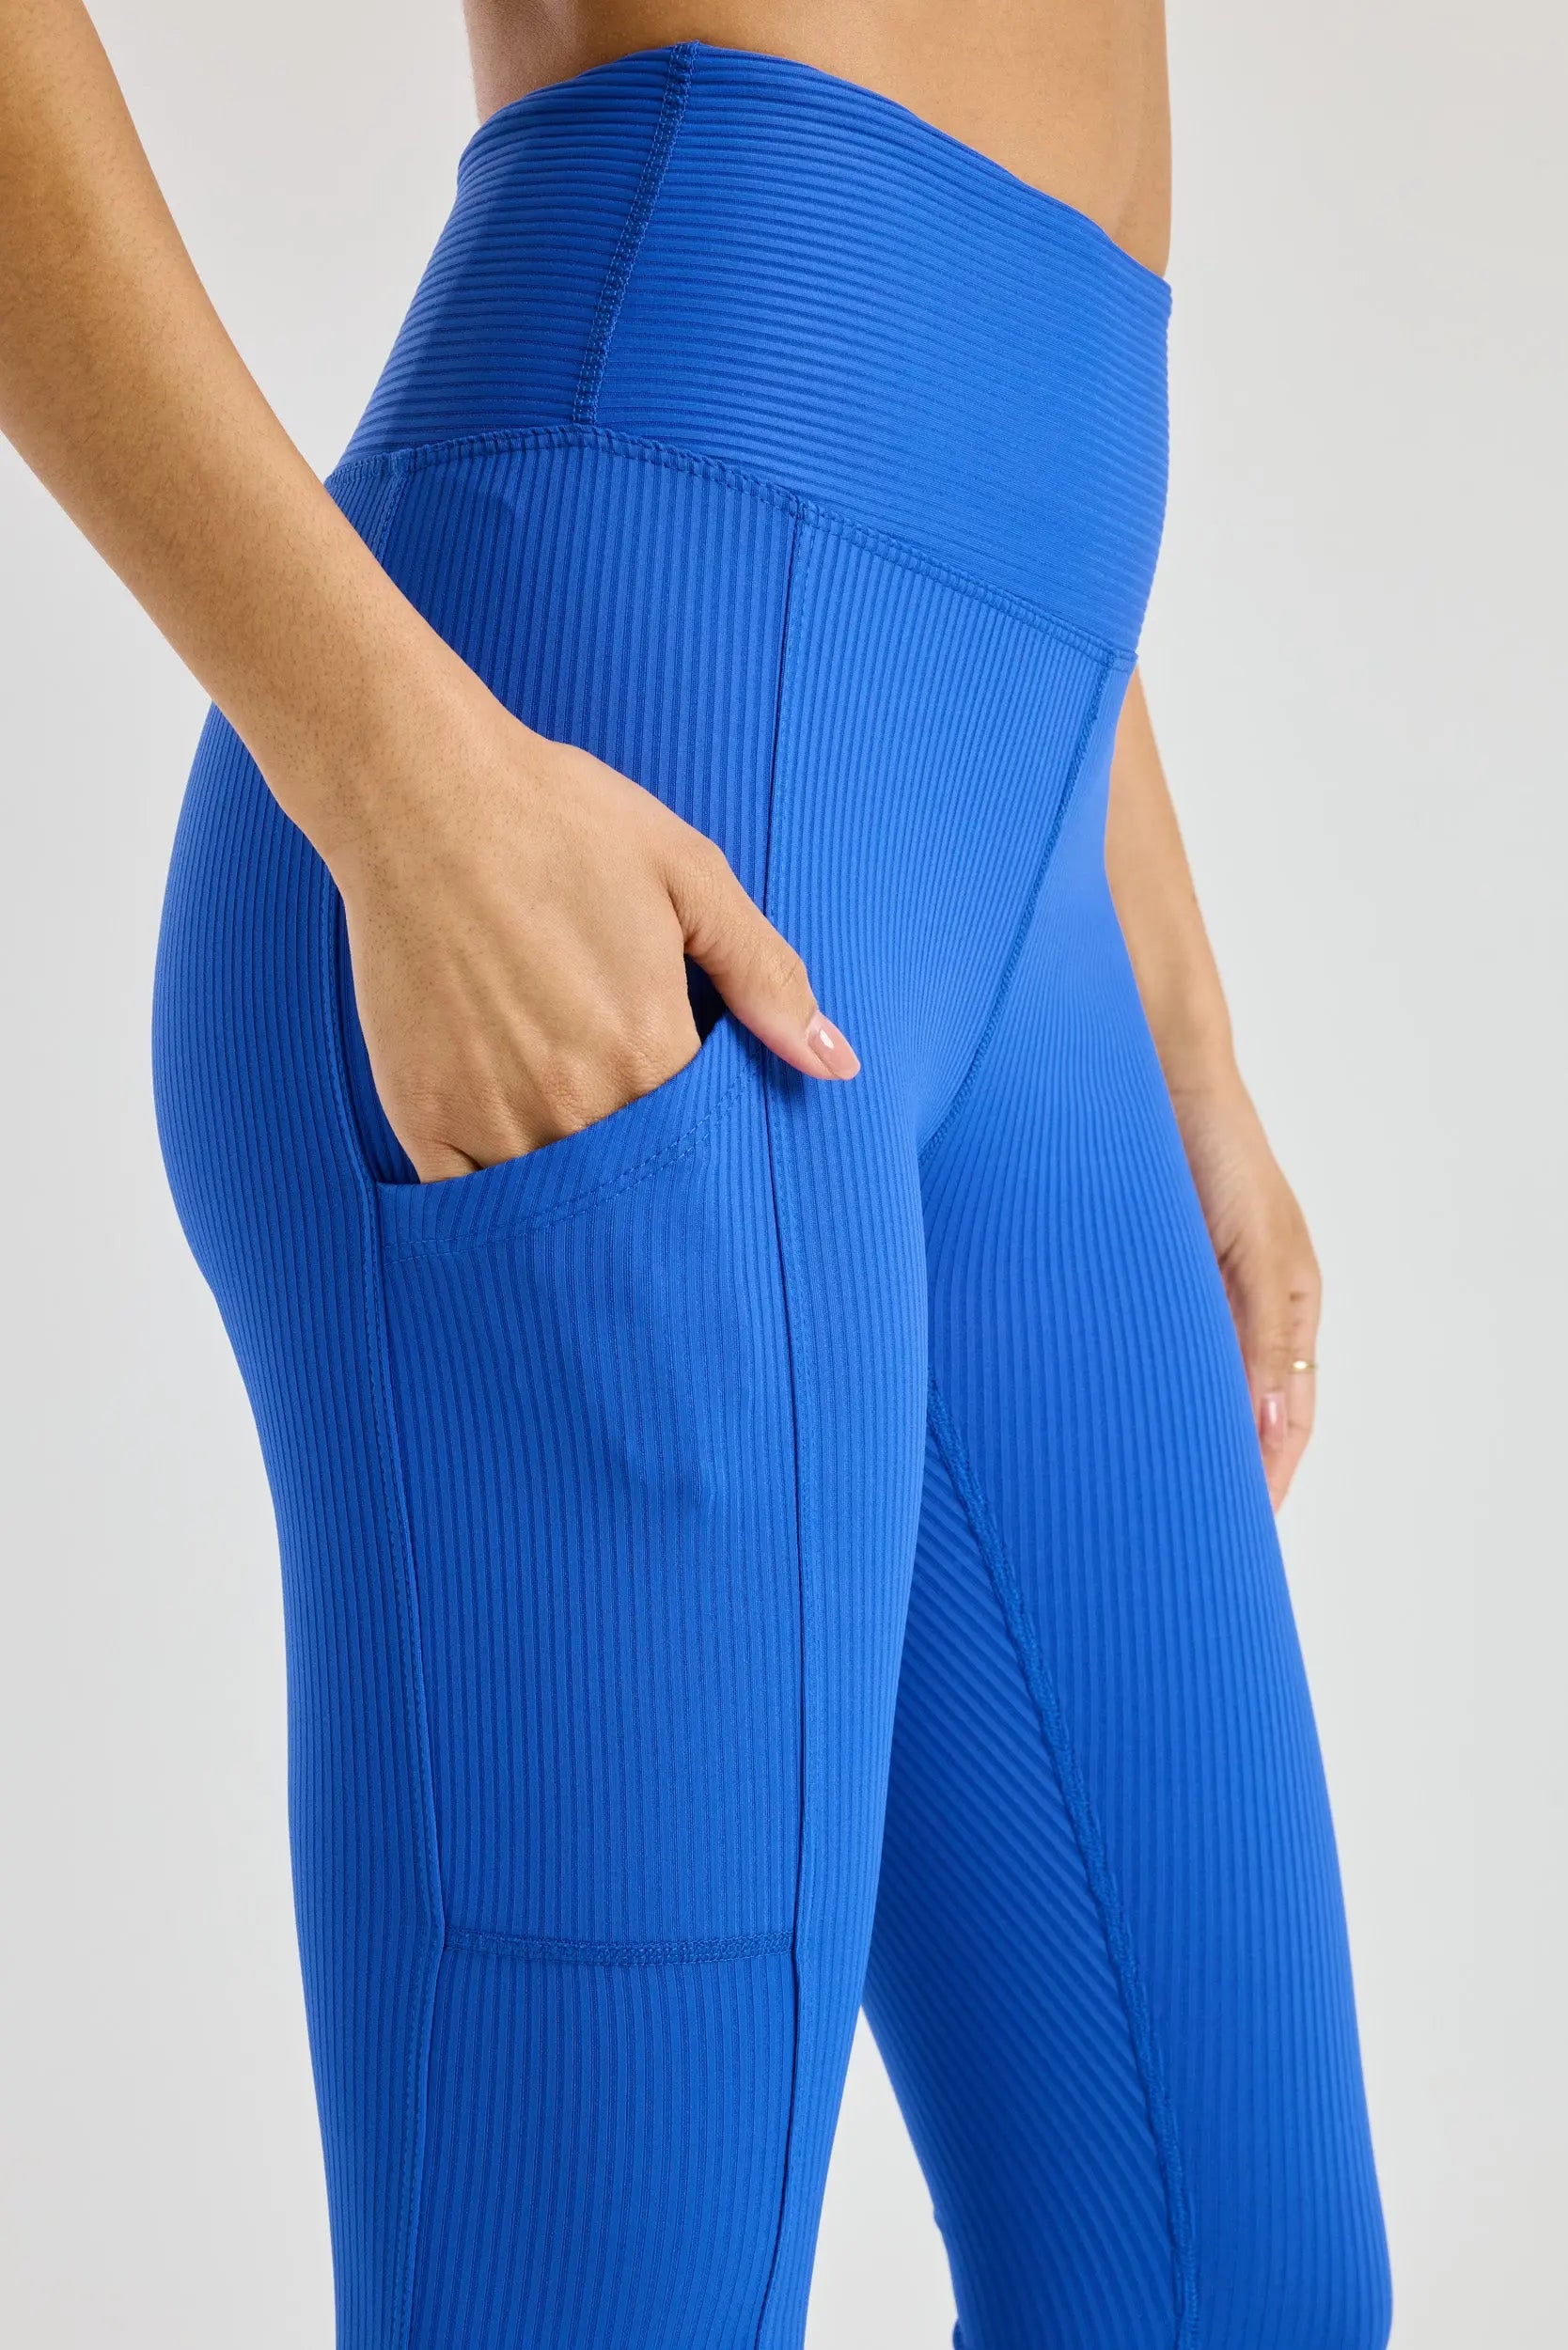 Lululemon heathered blue leggings - Gem